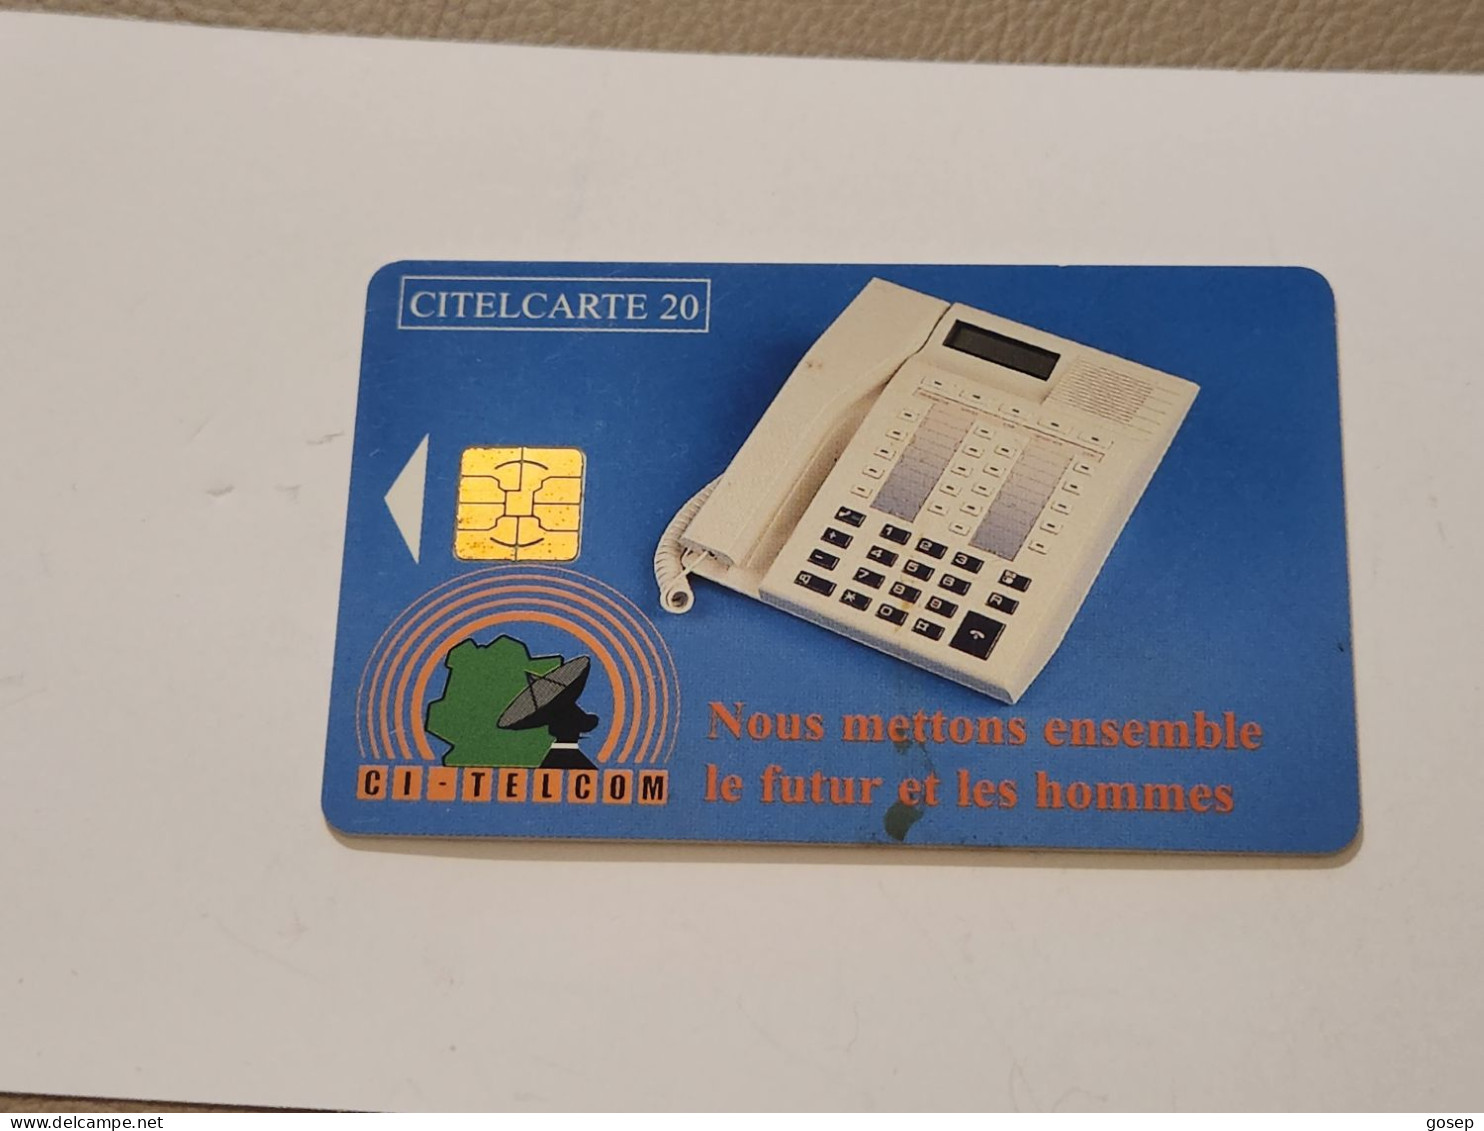 Ivory Coast-CI-CIT-0019)-telephone Nous-(39)-(20units)-(000246935)-(tirage-150.000)-used Card+1card Prepiad Free - Costa De Marfil